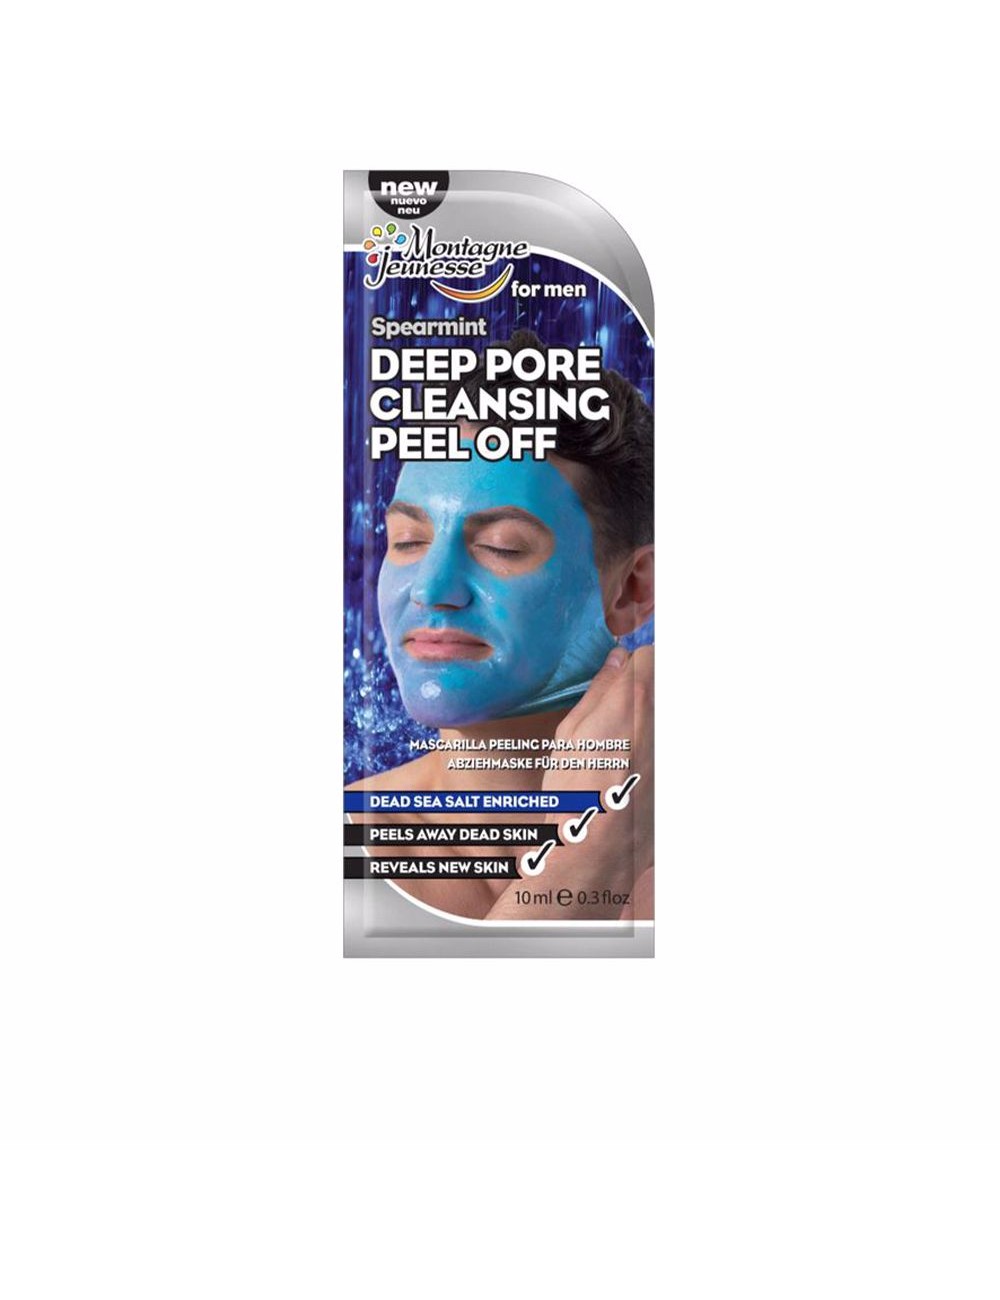 FOR MEN DEEP PORE cleansing Masque peel-off 10 ml